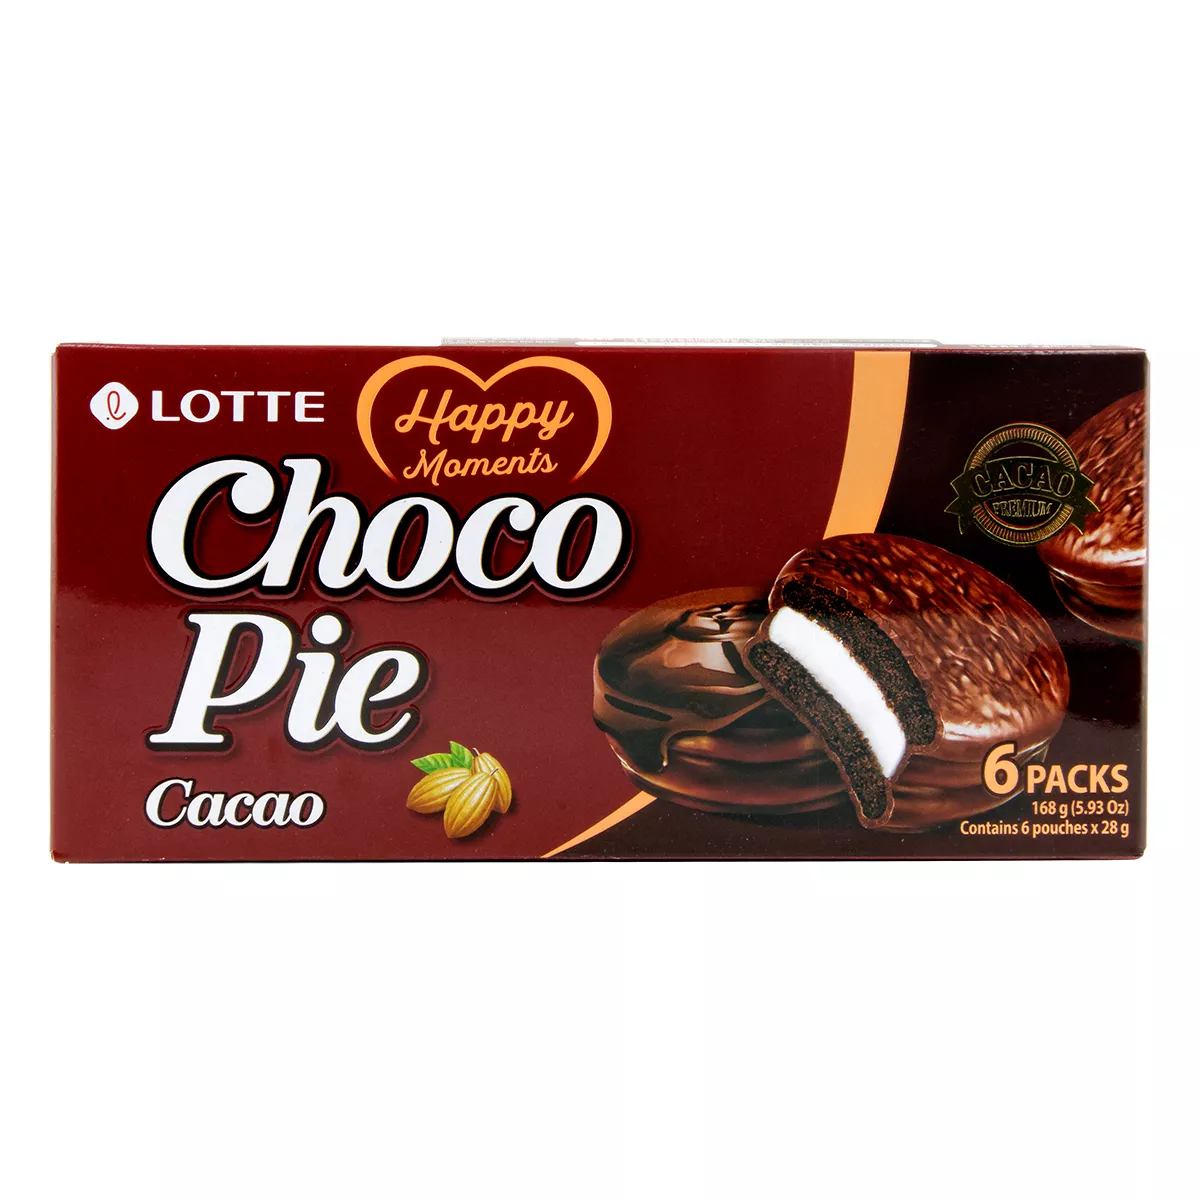 Prajitura Choco Pie cu cacao LOTTE (6x28g) 168g, [],asianfood.ro